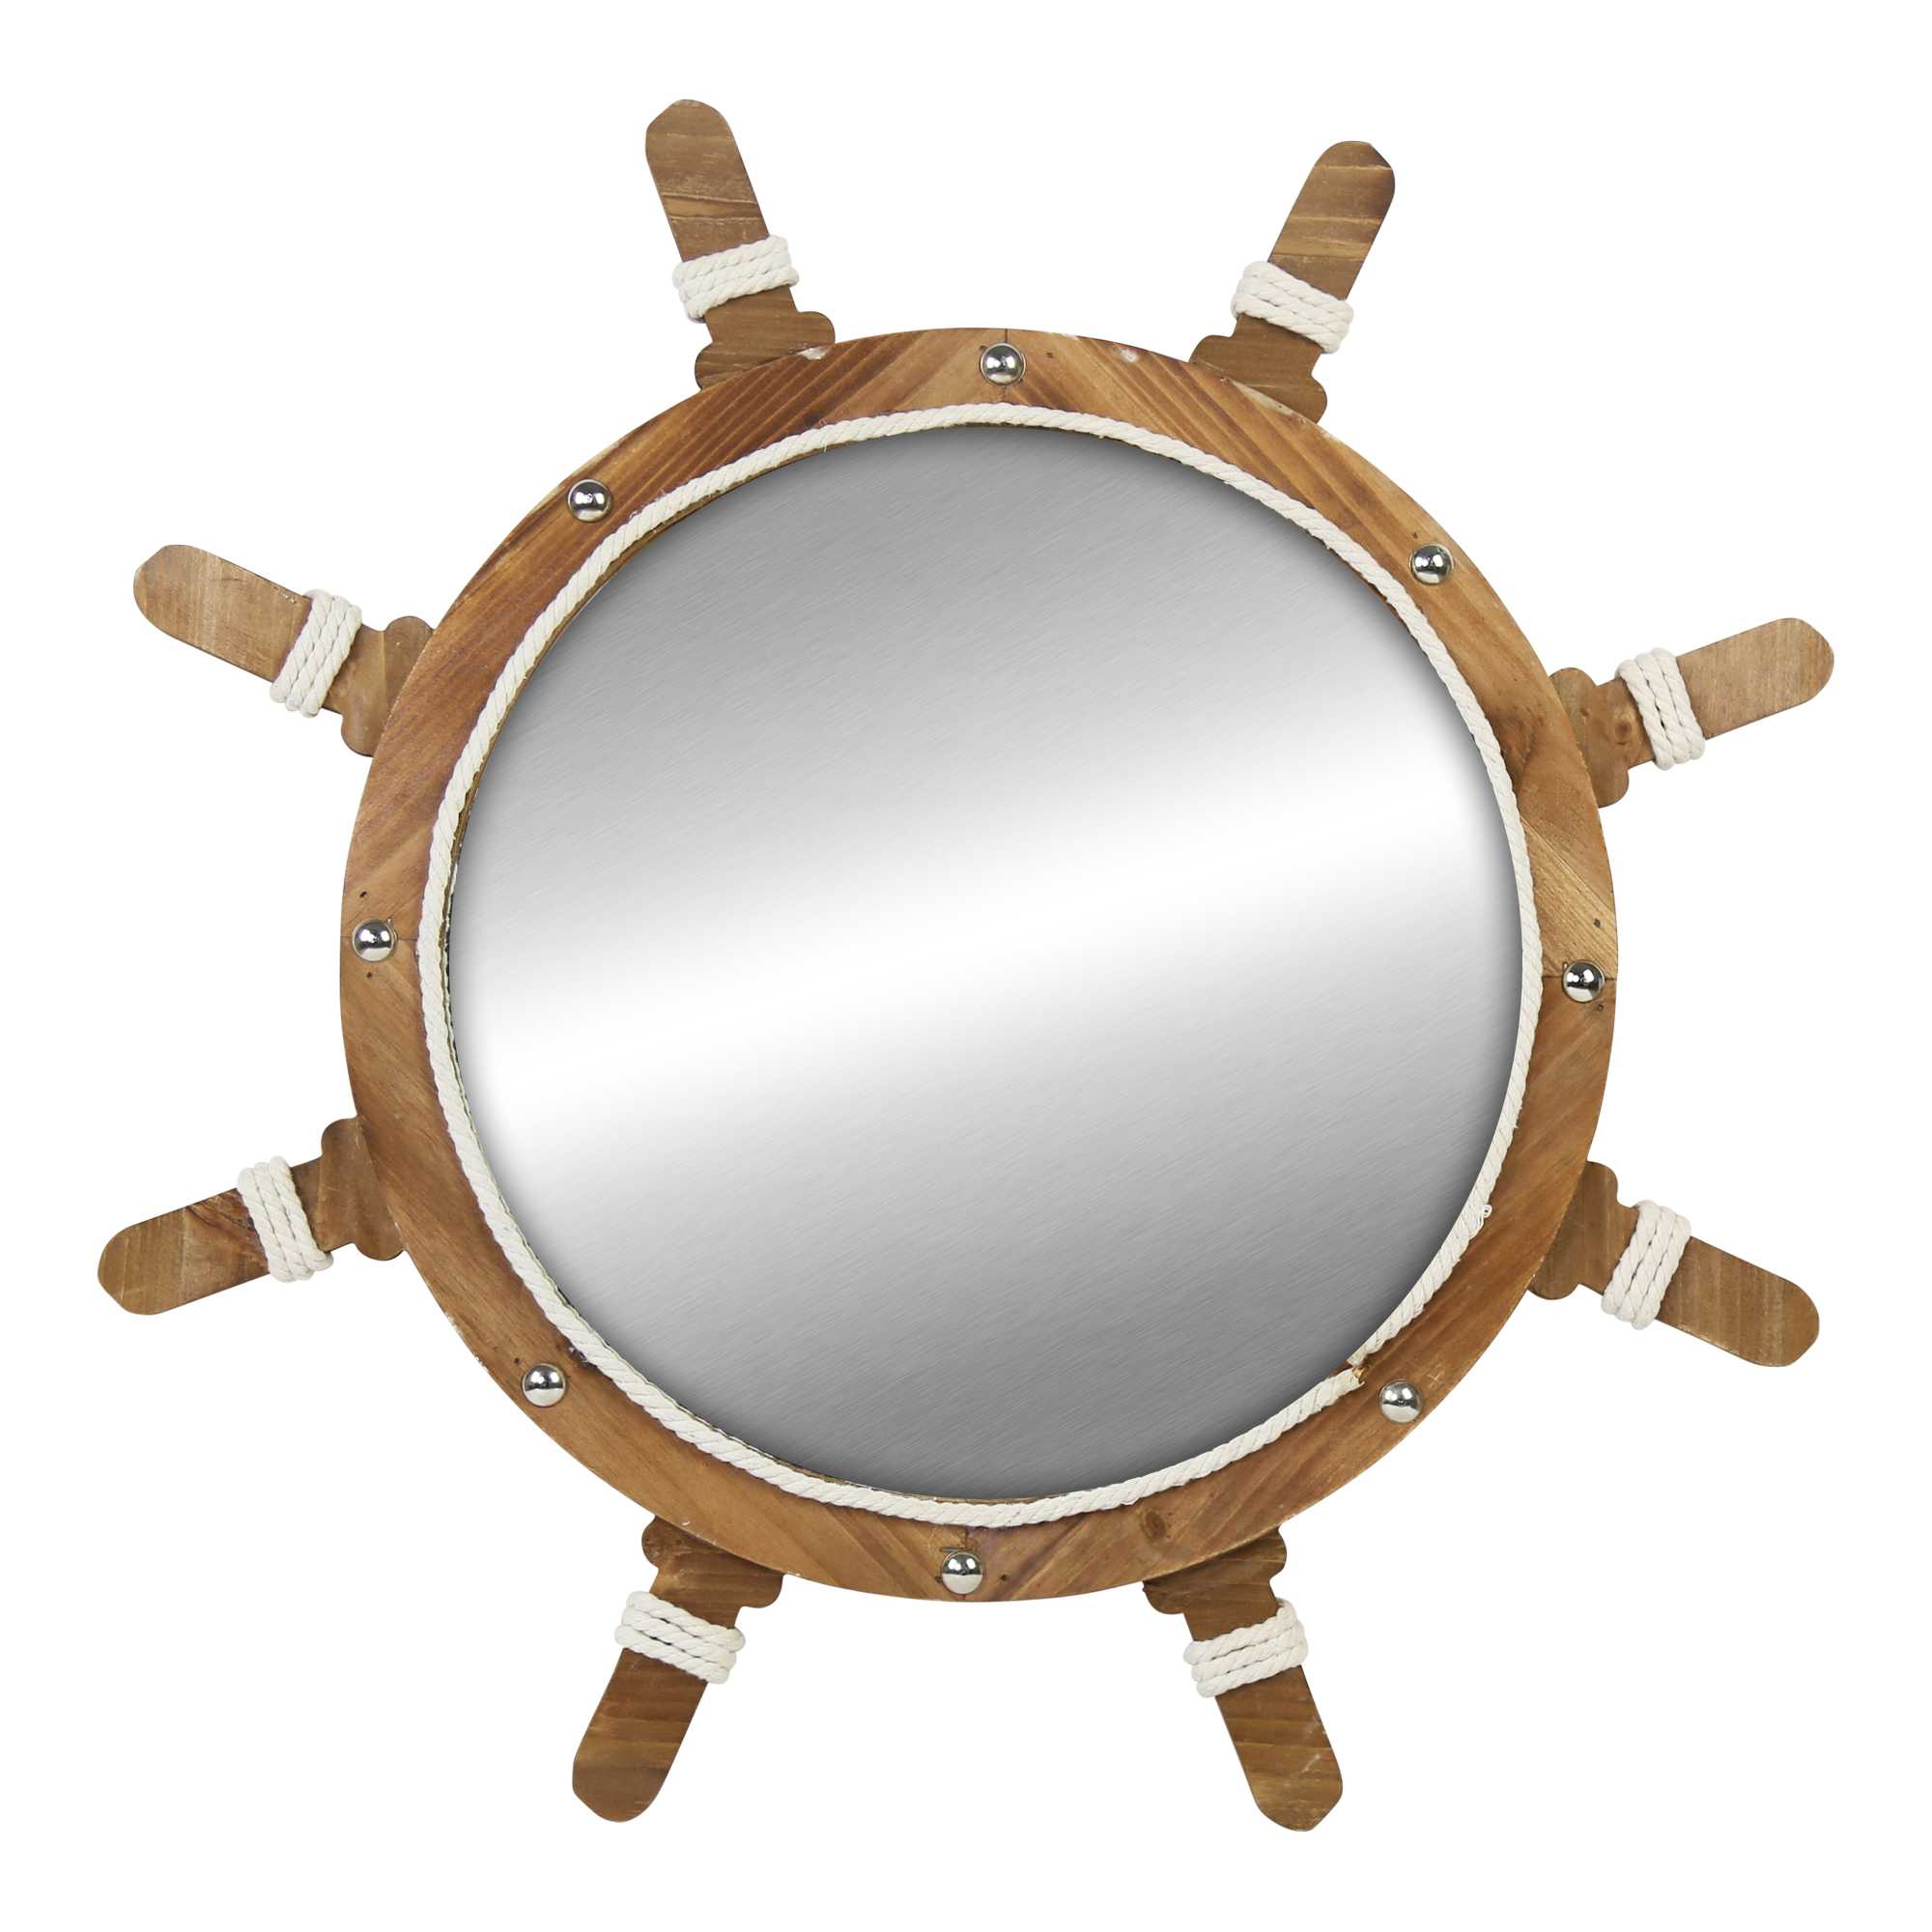 Ship Wheel Wall Mirror